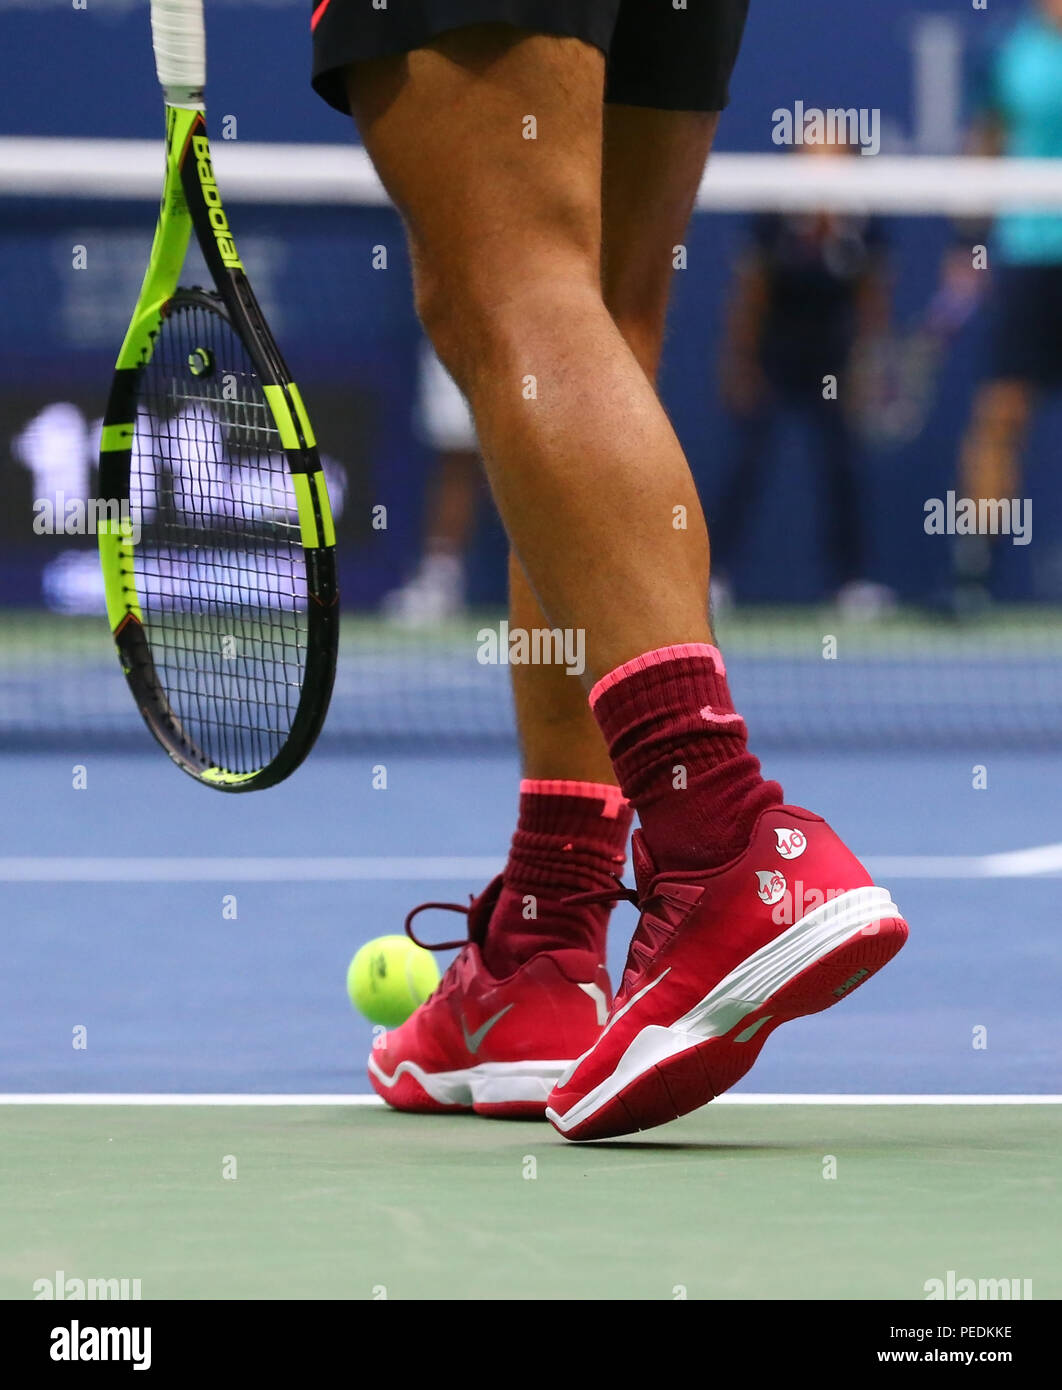 Grand Slam Champion Rafael Nadal aus Spanien trägt custom Nike Tennisschuhe  bei US Open 2017 Finale Stockfotografie - Alamy